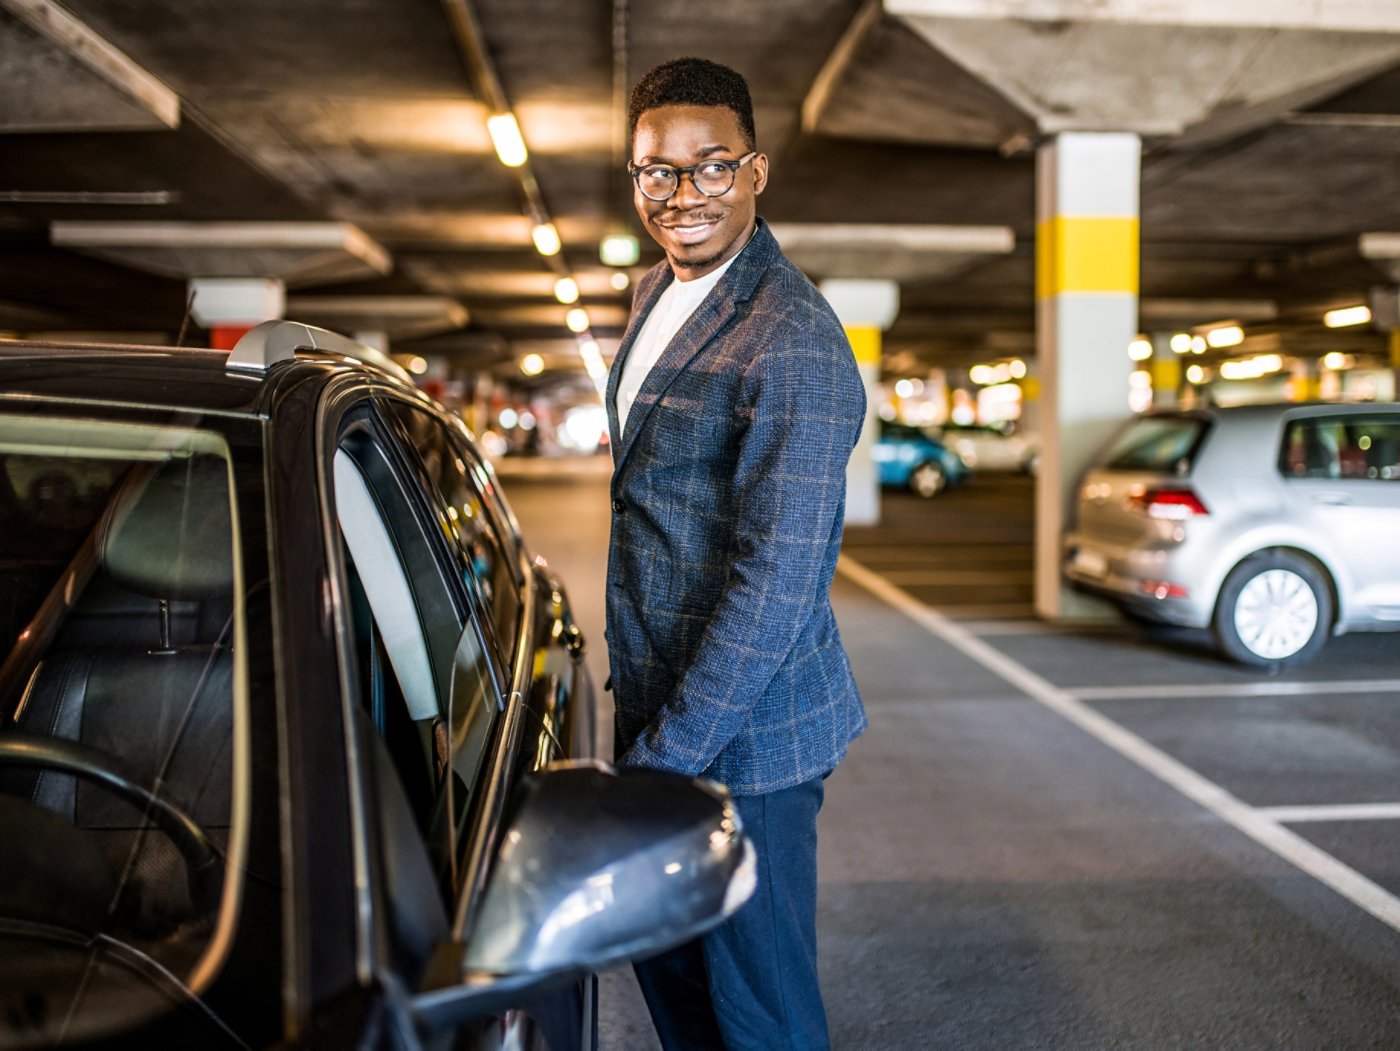 Cheerful African American entrepreneur getting in his car at public car garage.